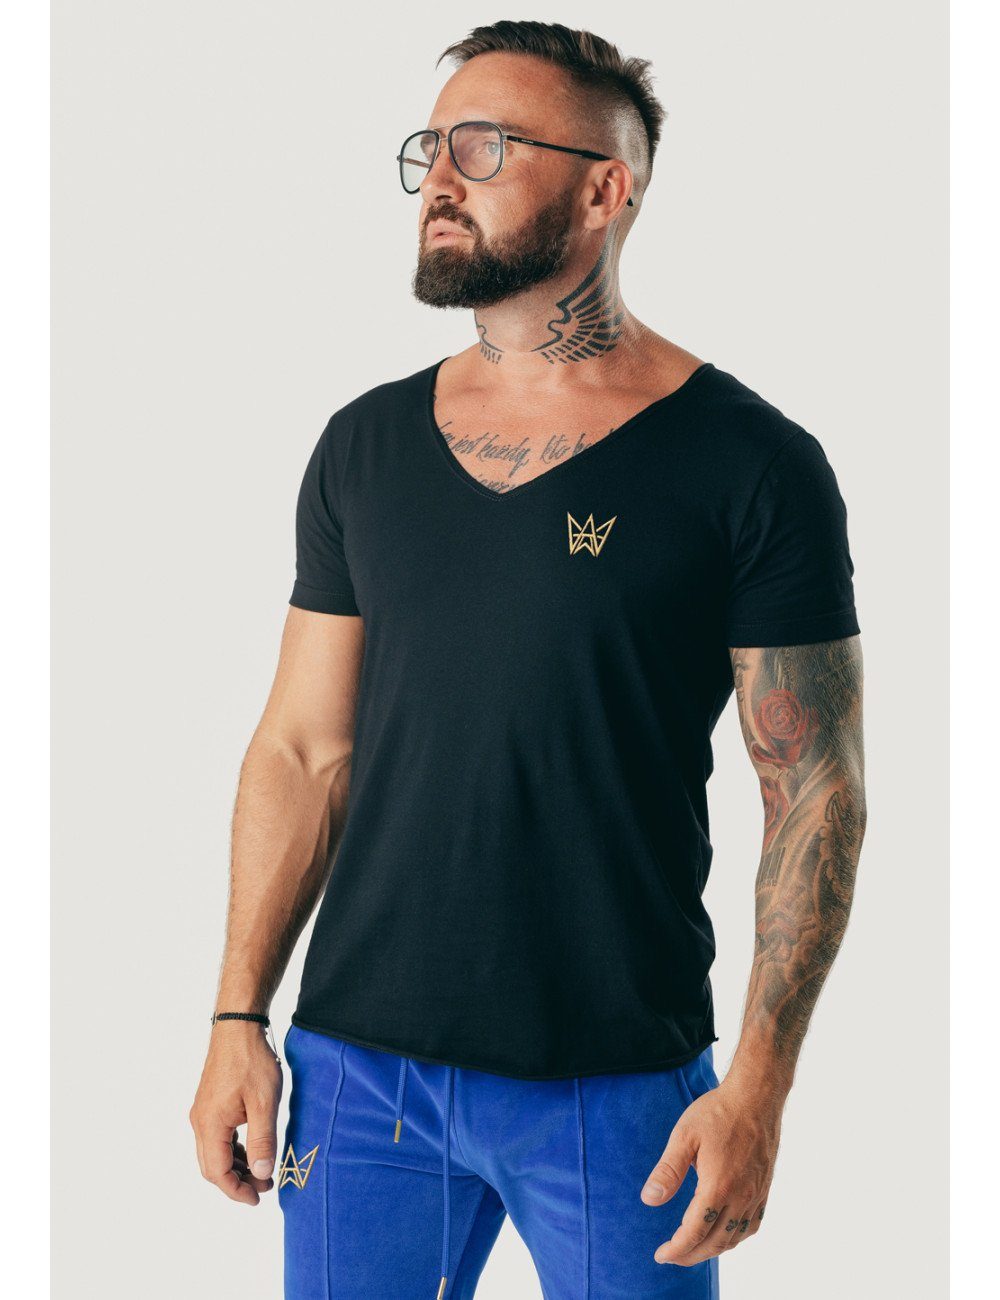 TRES AMIGOS T-Shirt Schwarz Trendiges Logostrickerei Shirt mit V-Neck